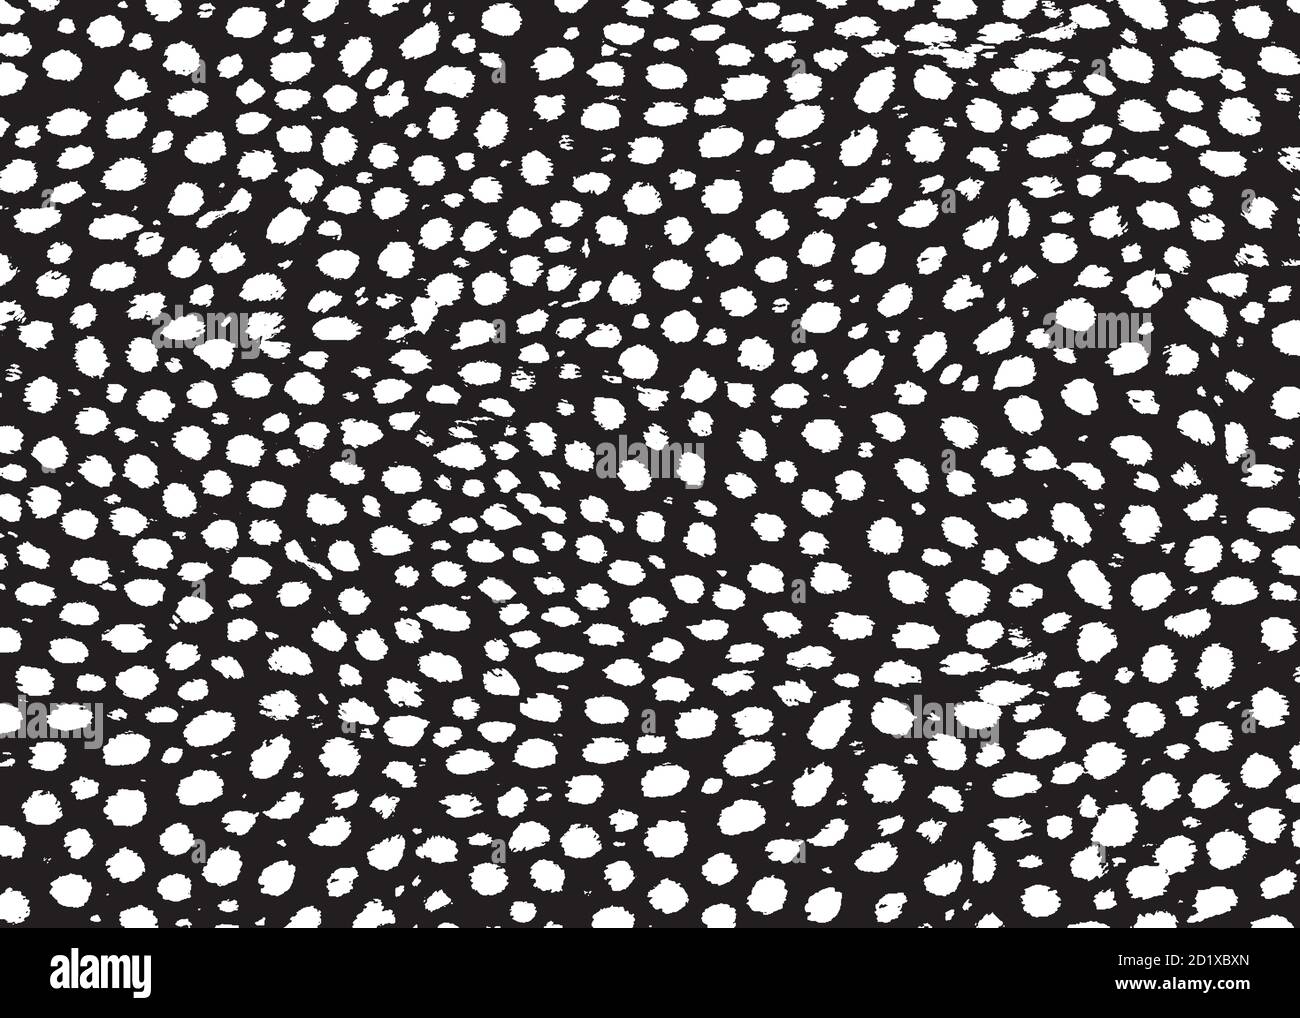 Polka dots dot spots spot Stock Vector Images - Page 2 - Alamy